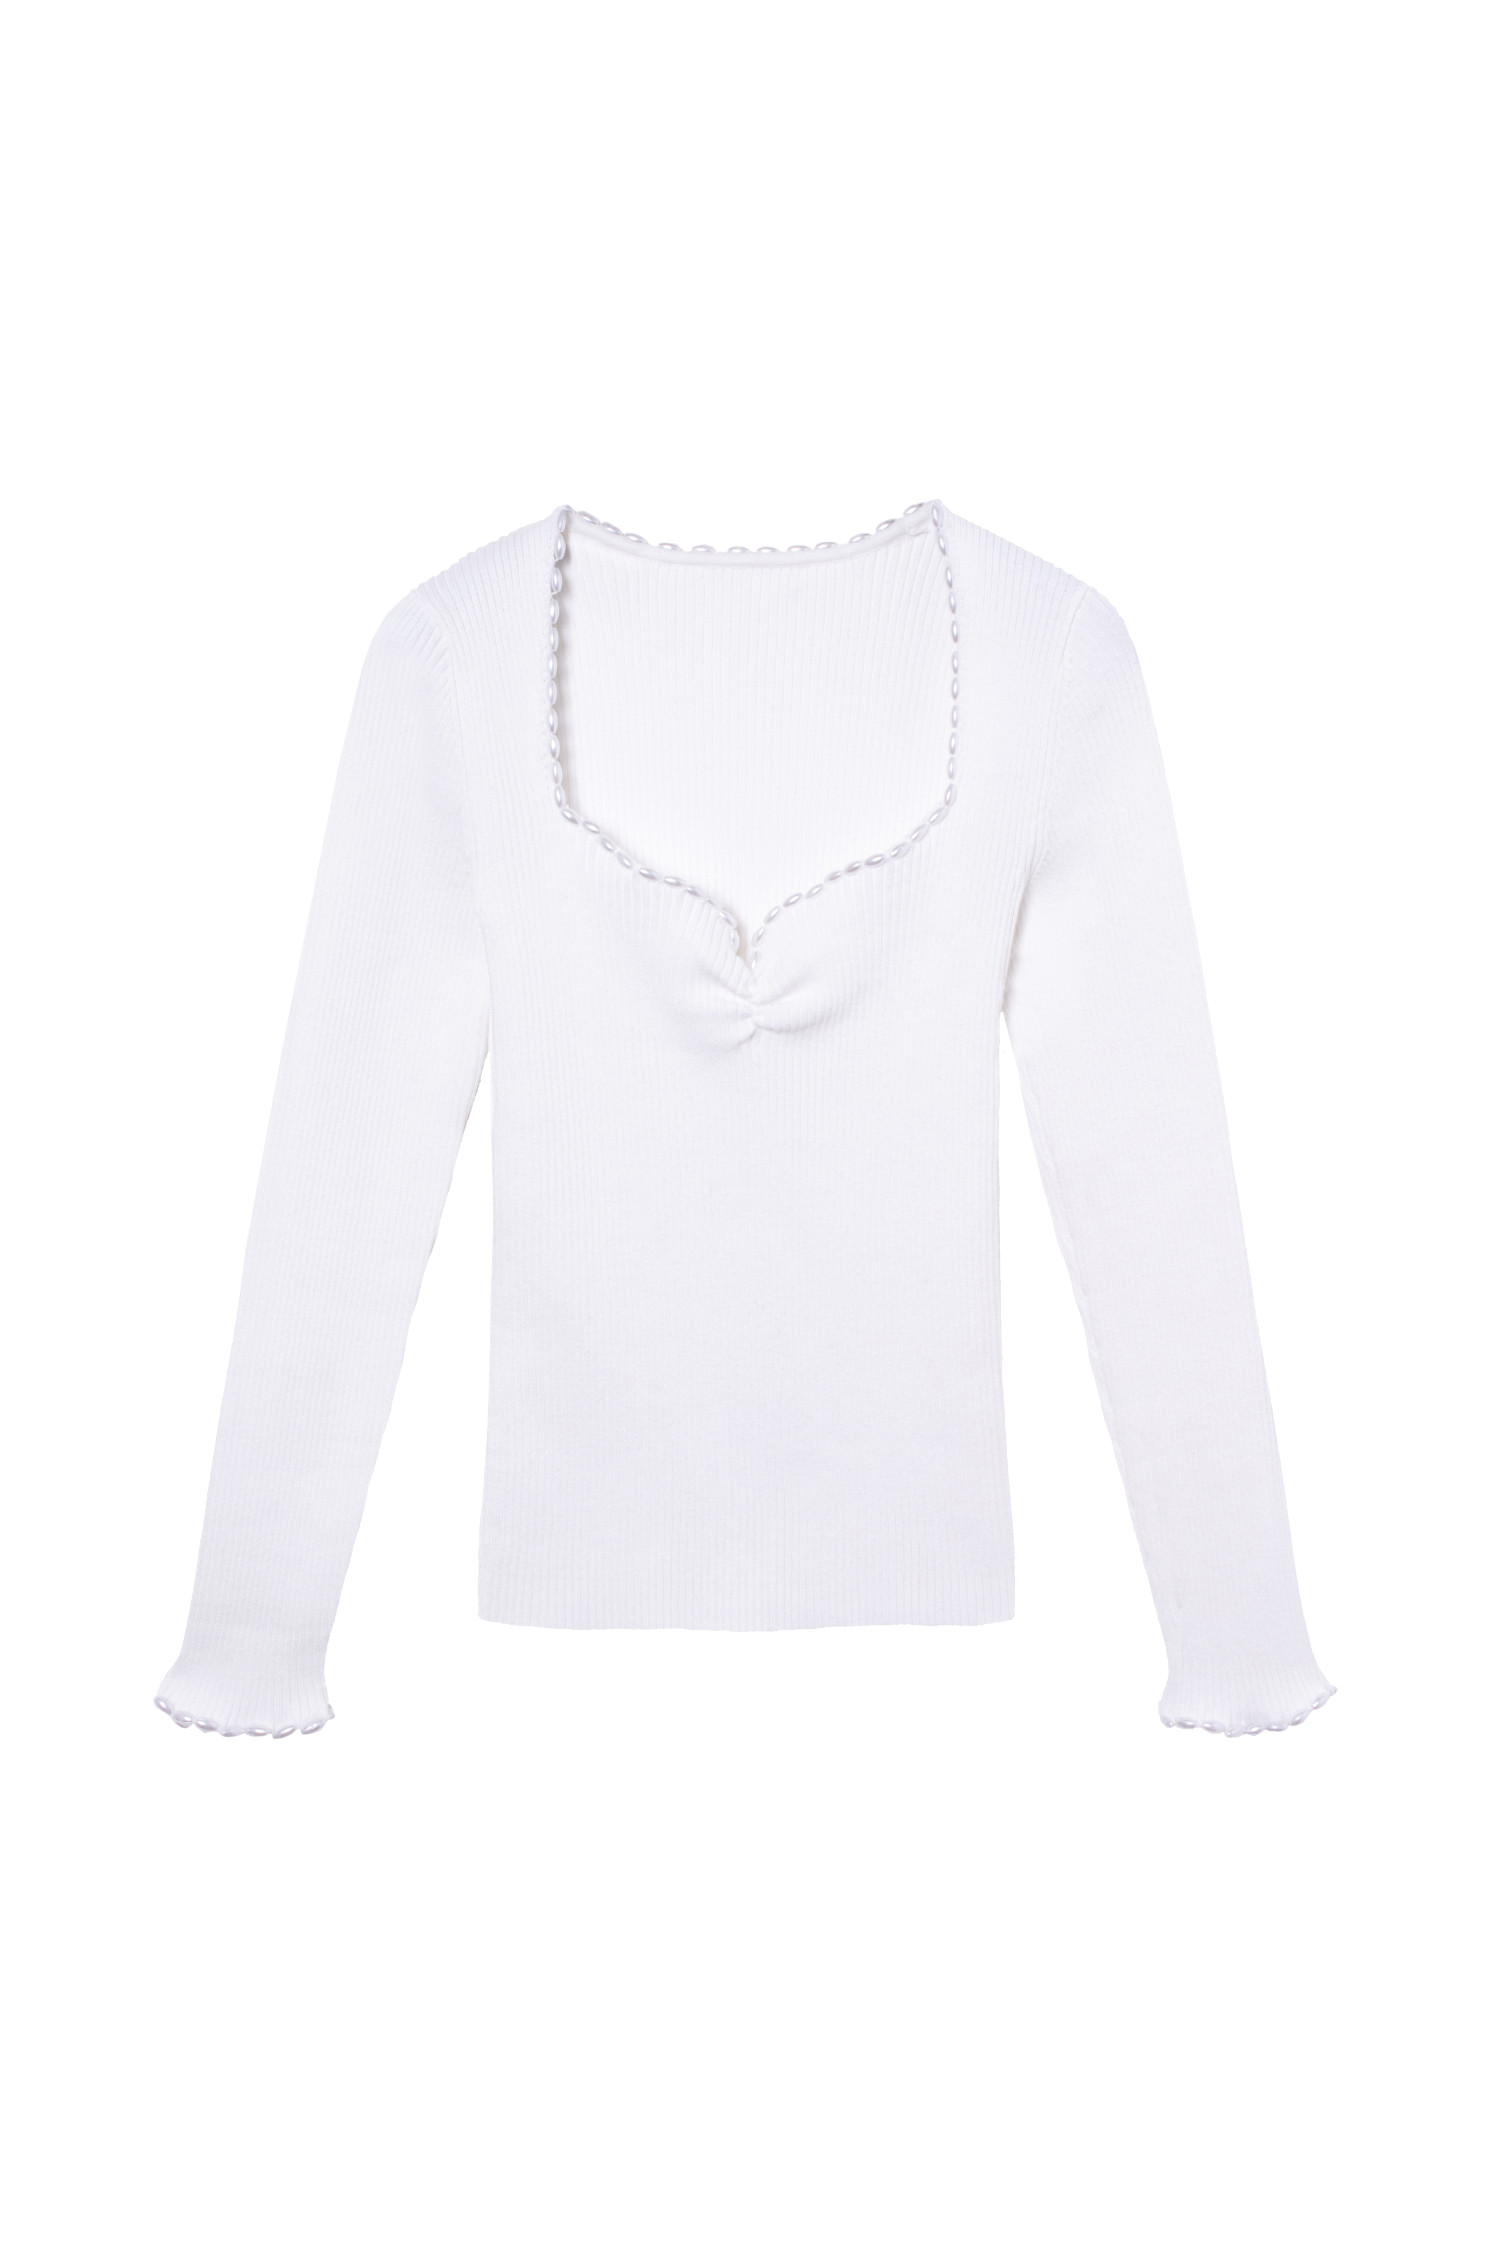 Musier Paris White Sweater Top